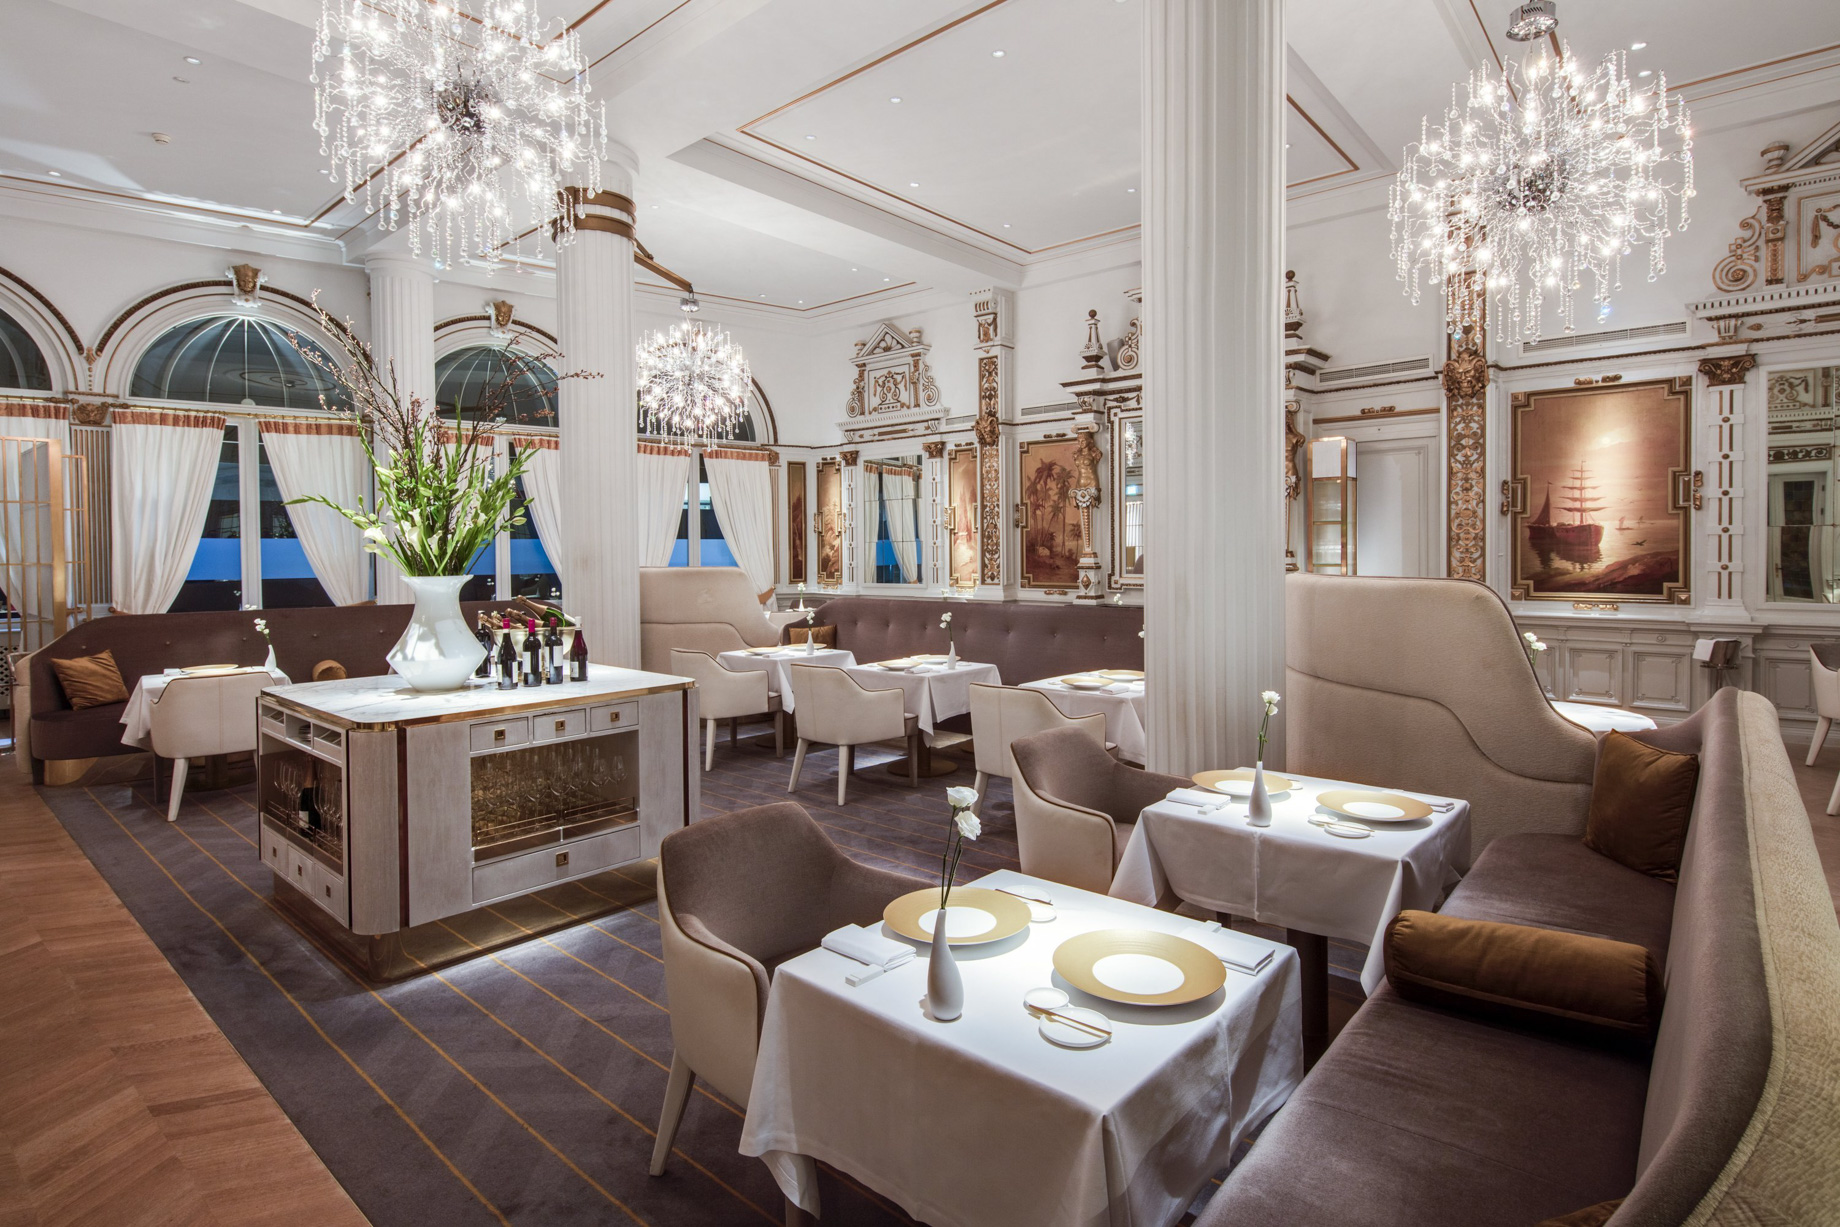 Anantara Grand Hotel Krasnapolsky Amsterdam – Netherlands – The White Room